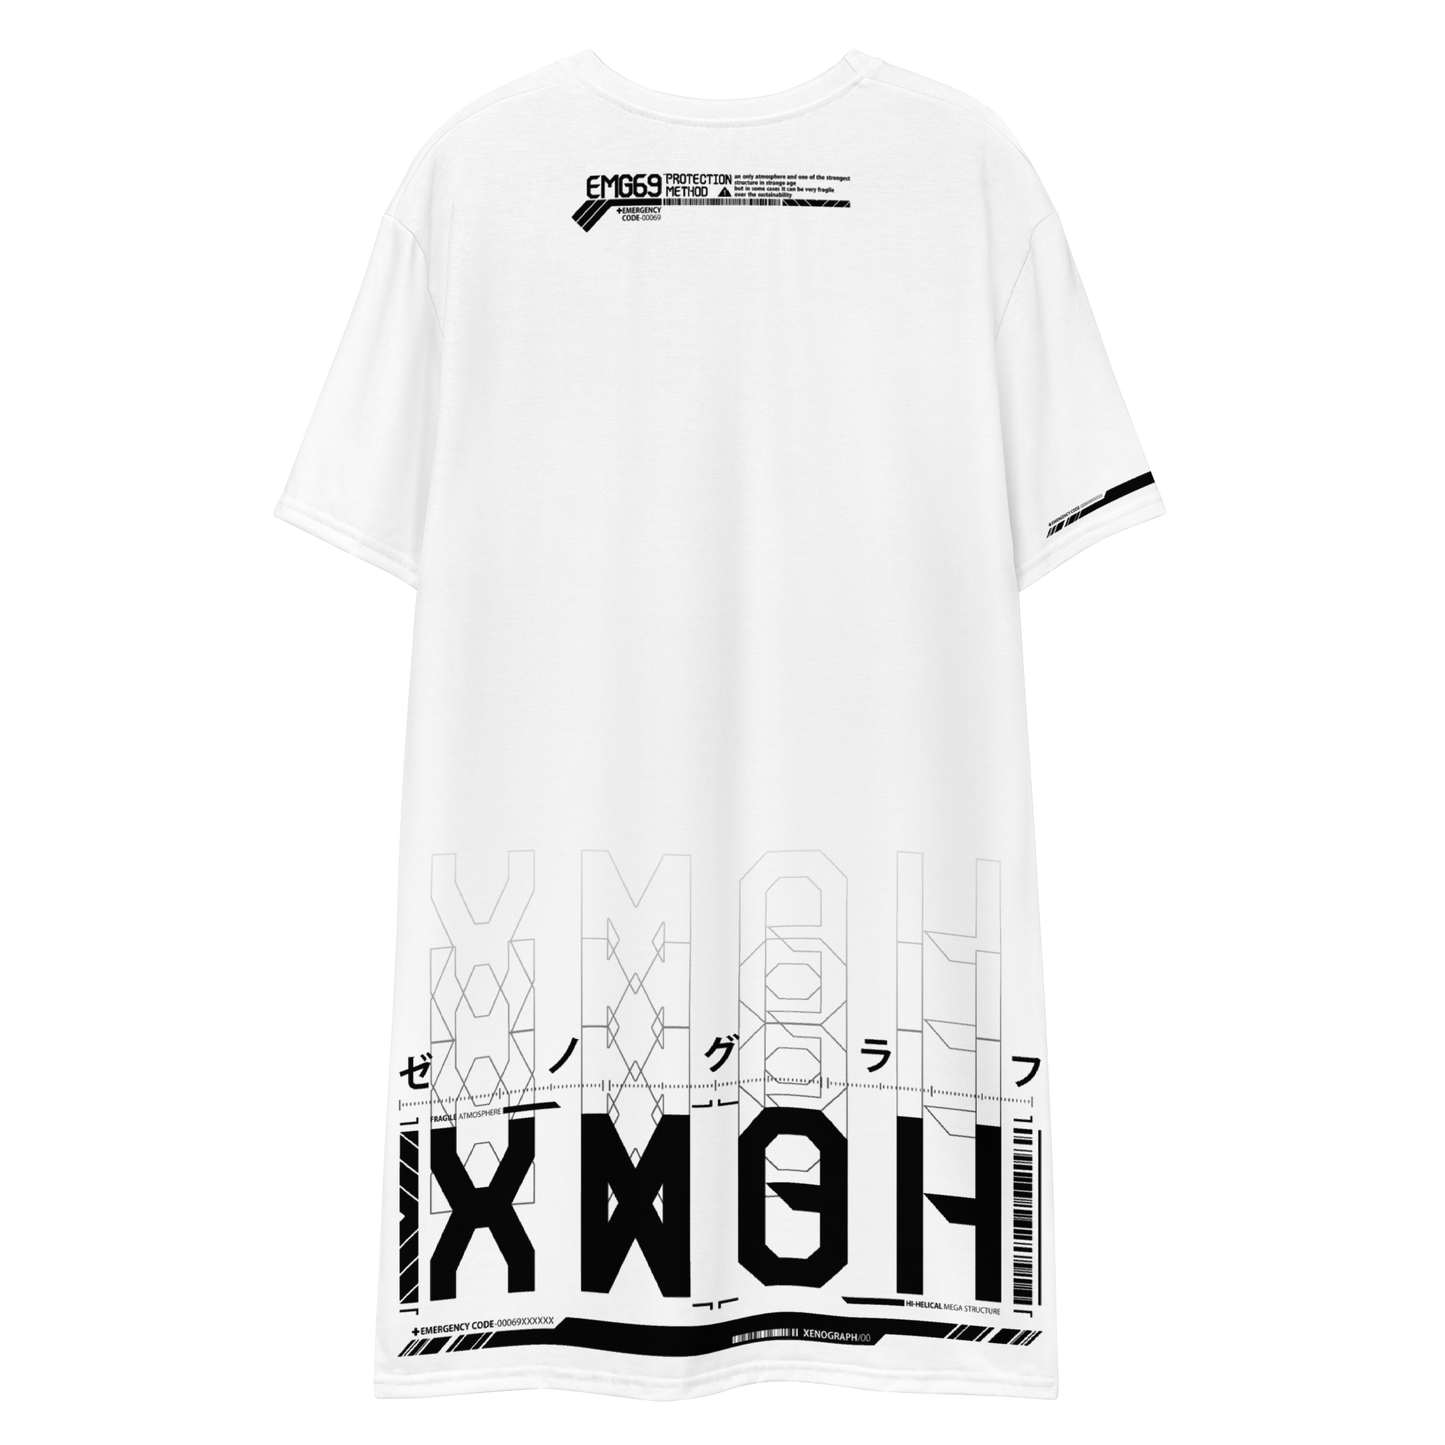 XENOGRAPH ver.1.5 [ unisex / full print over size long T-shirt ] white